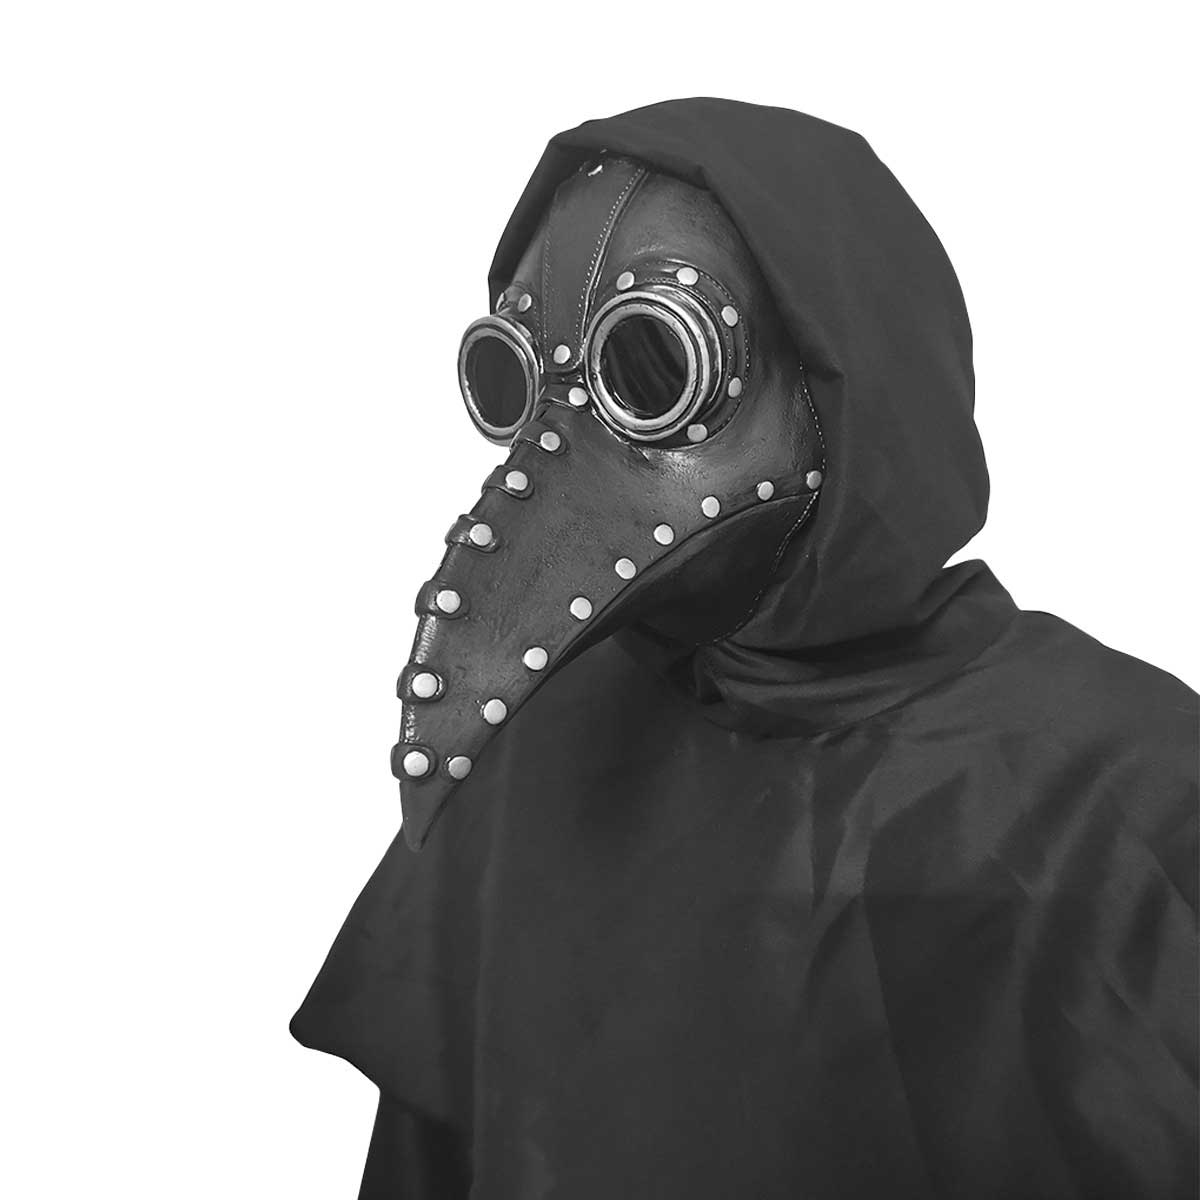 Plague Doctor Halloween Cosplay Face Mask Creepy Black Death Bird Beak Costume Persona Props-